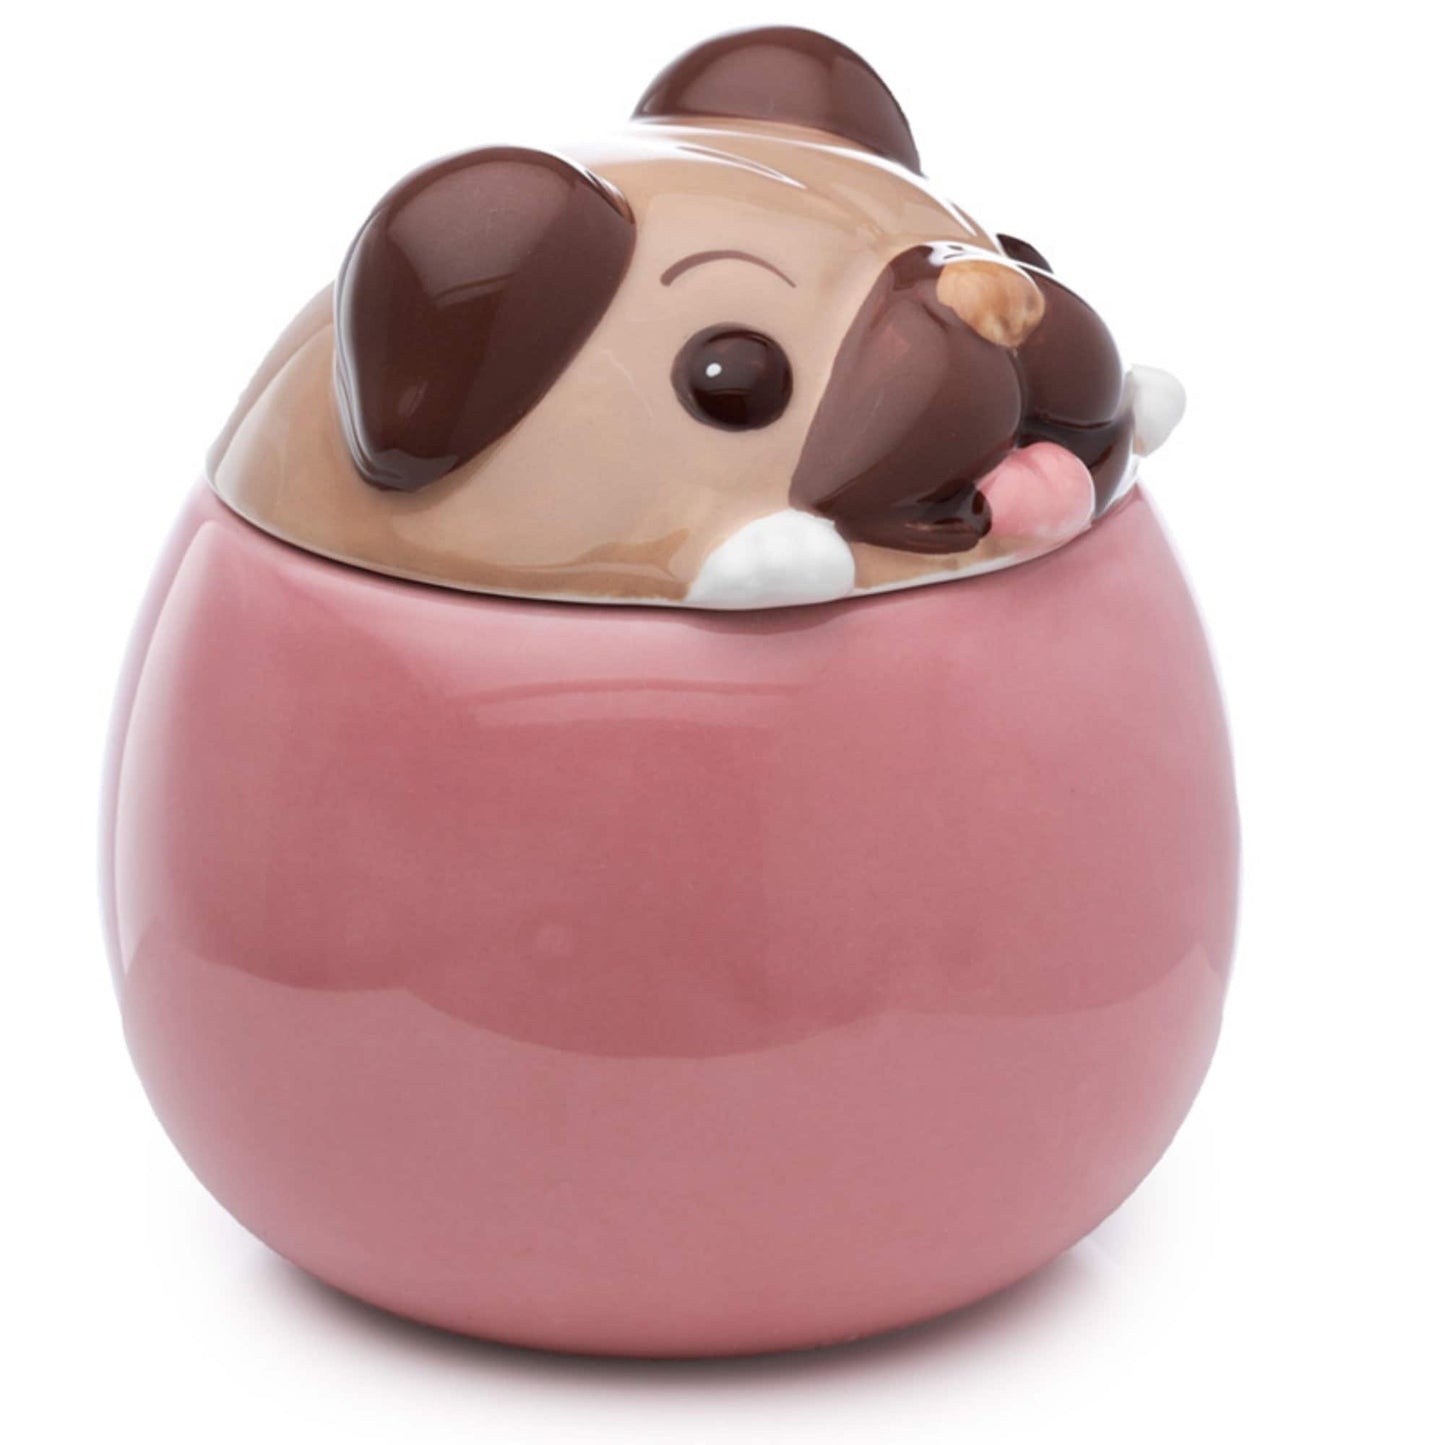 Pug Lidded Mug, Cute Novelty Ceramic Dog Mug, Animal Mug, Dog Lover Gift Mug, Pug Present, Fun Peeping Pug Lidded Mug